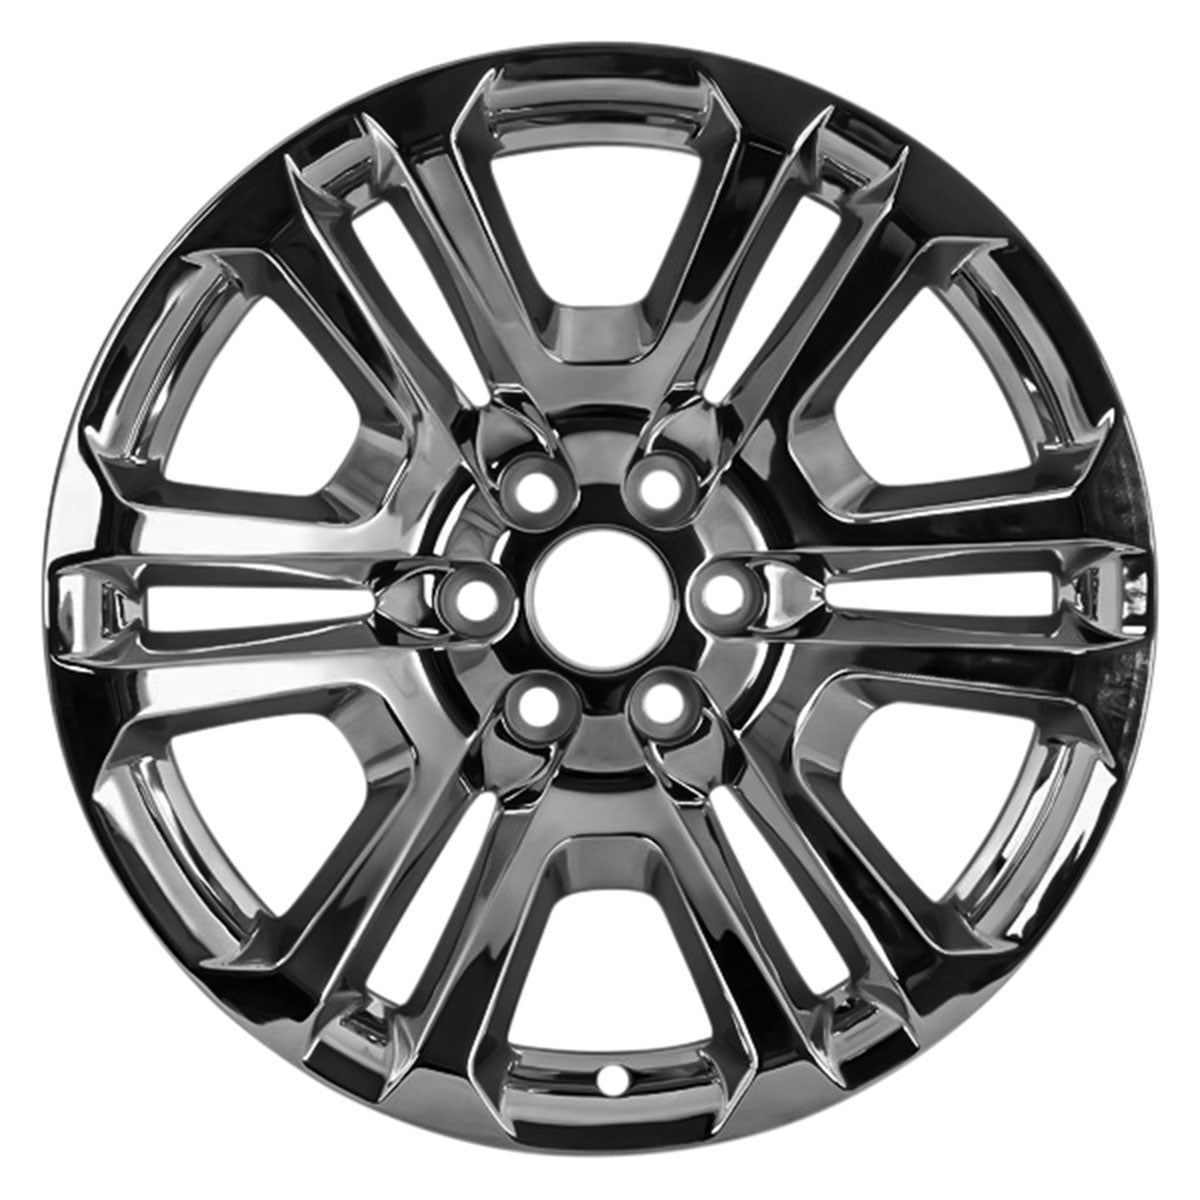 2021 GMC Yukon XL New 22" Replacement Wheel Rim RW4741CHR